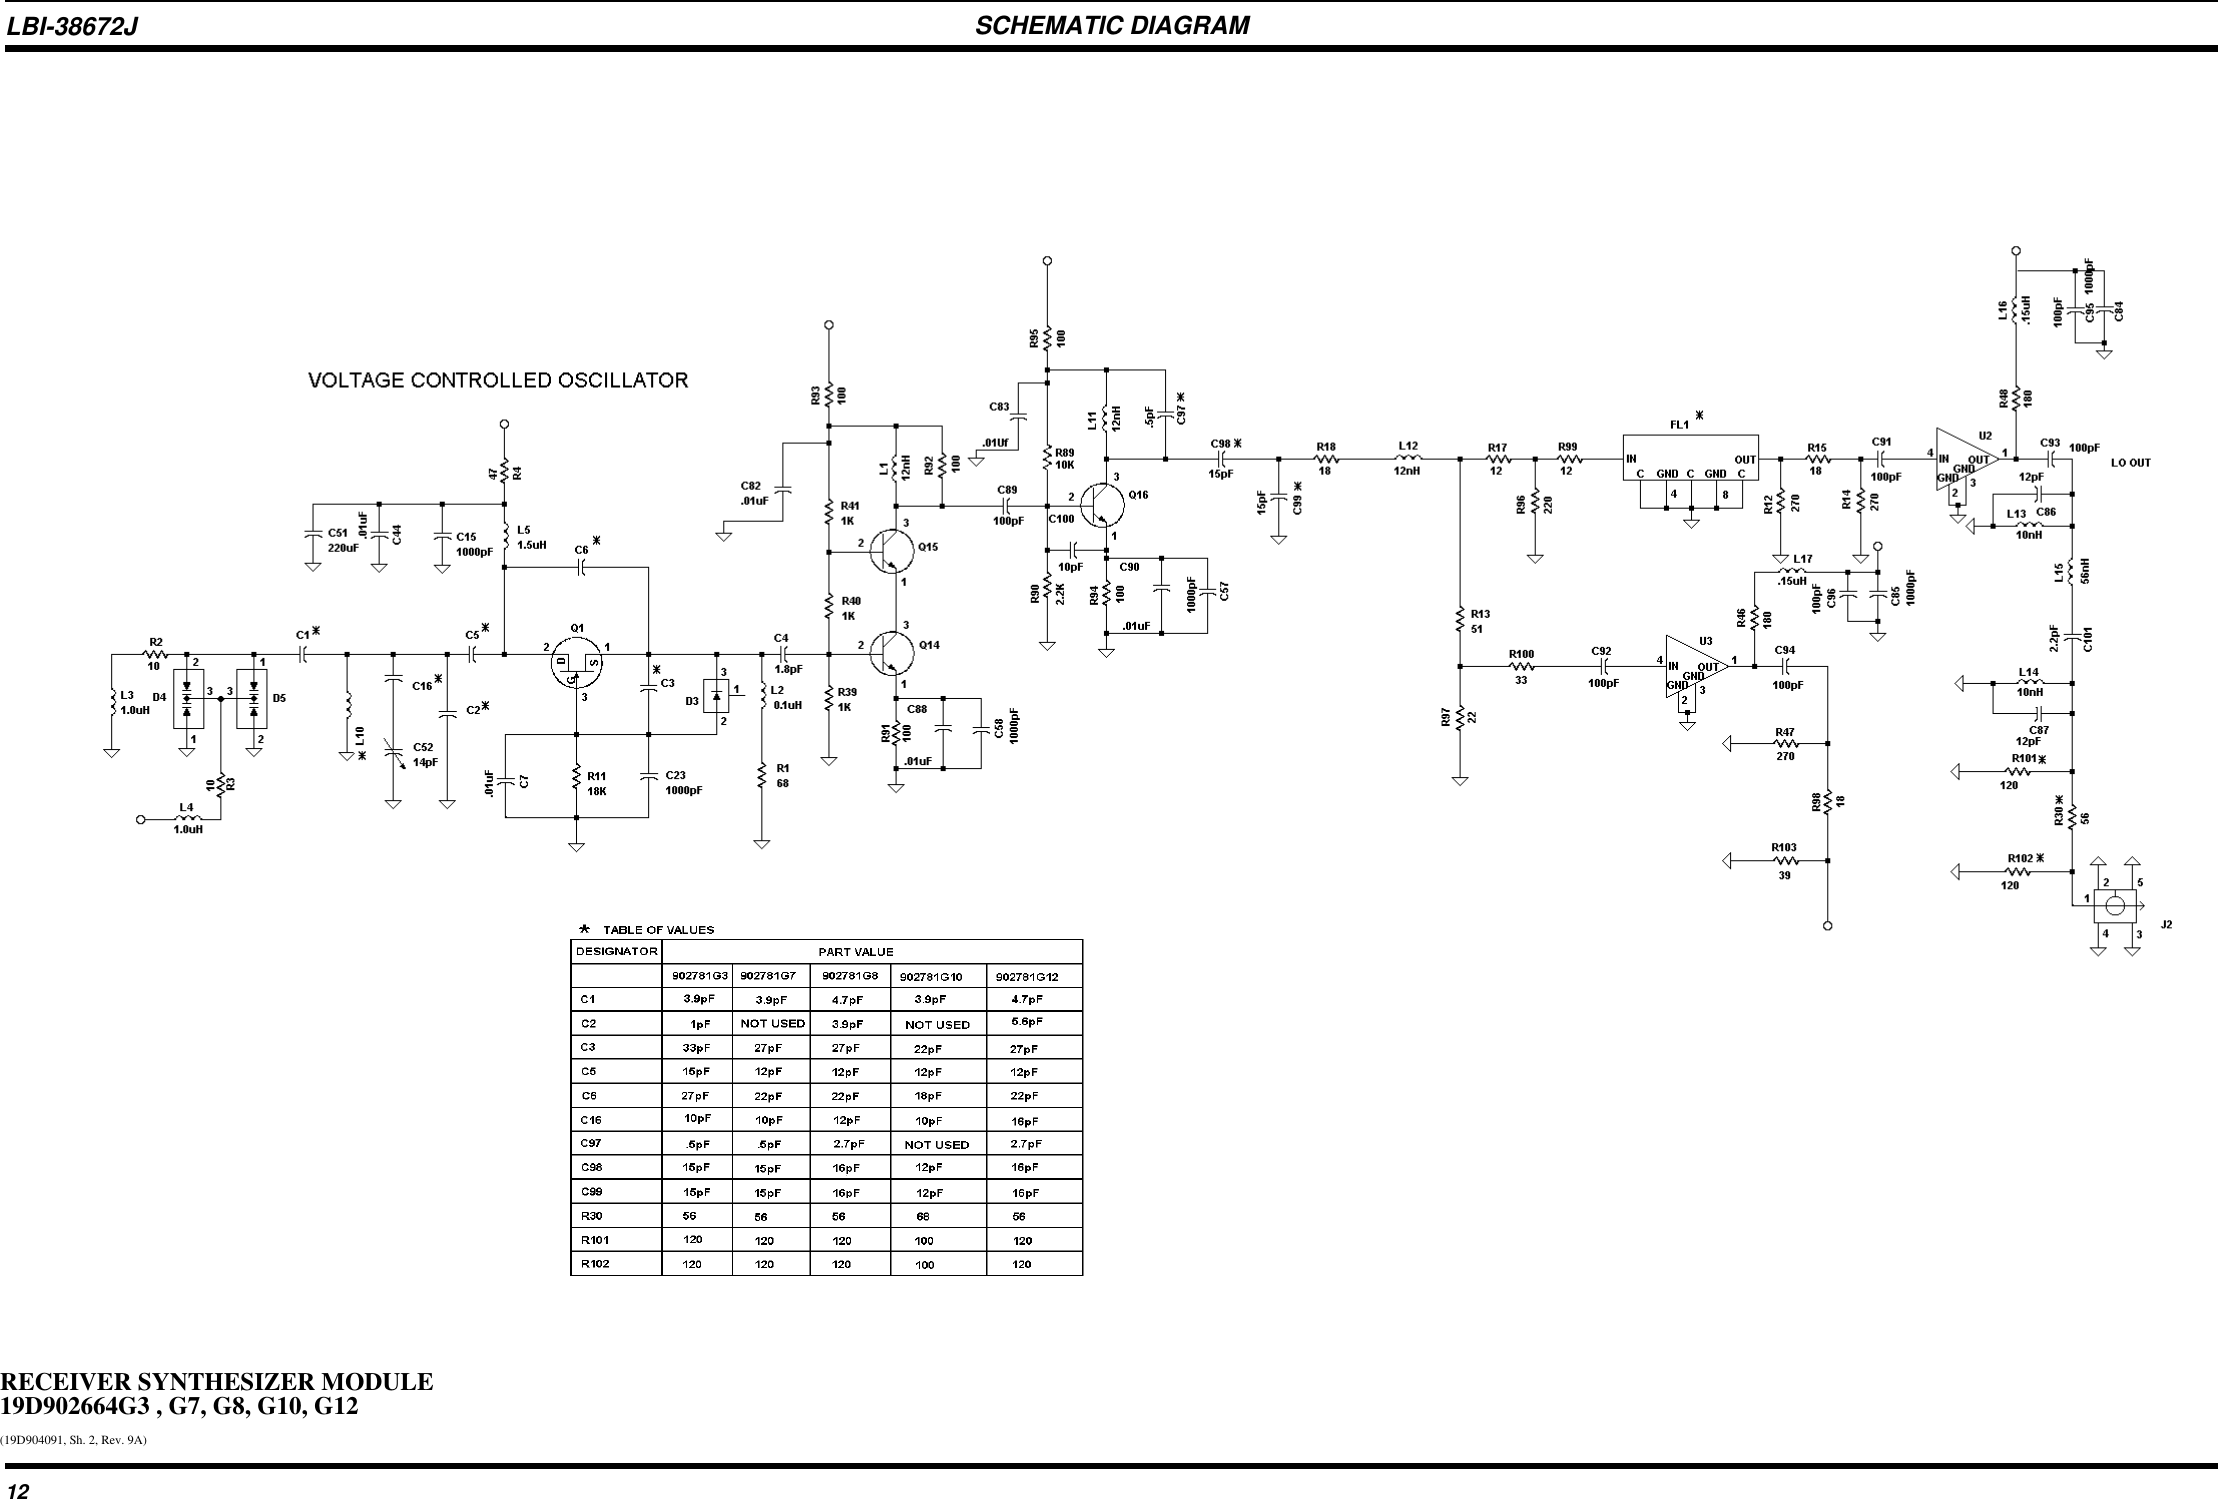 SCHEMATIC DIAGRAMRECEIVER SYNTHESIZER MODULE19D902664G3 , G7, G8, G10, G12(19D904091, Sh. 2, Rev. 9A)LBI-38672J12